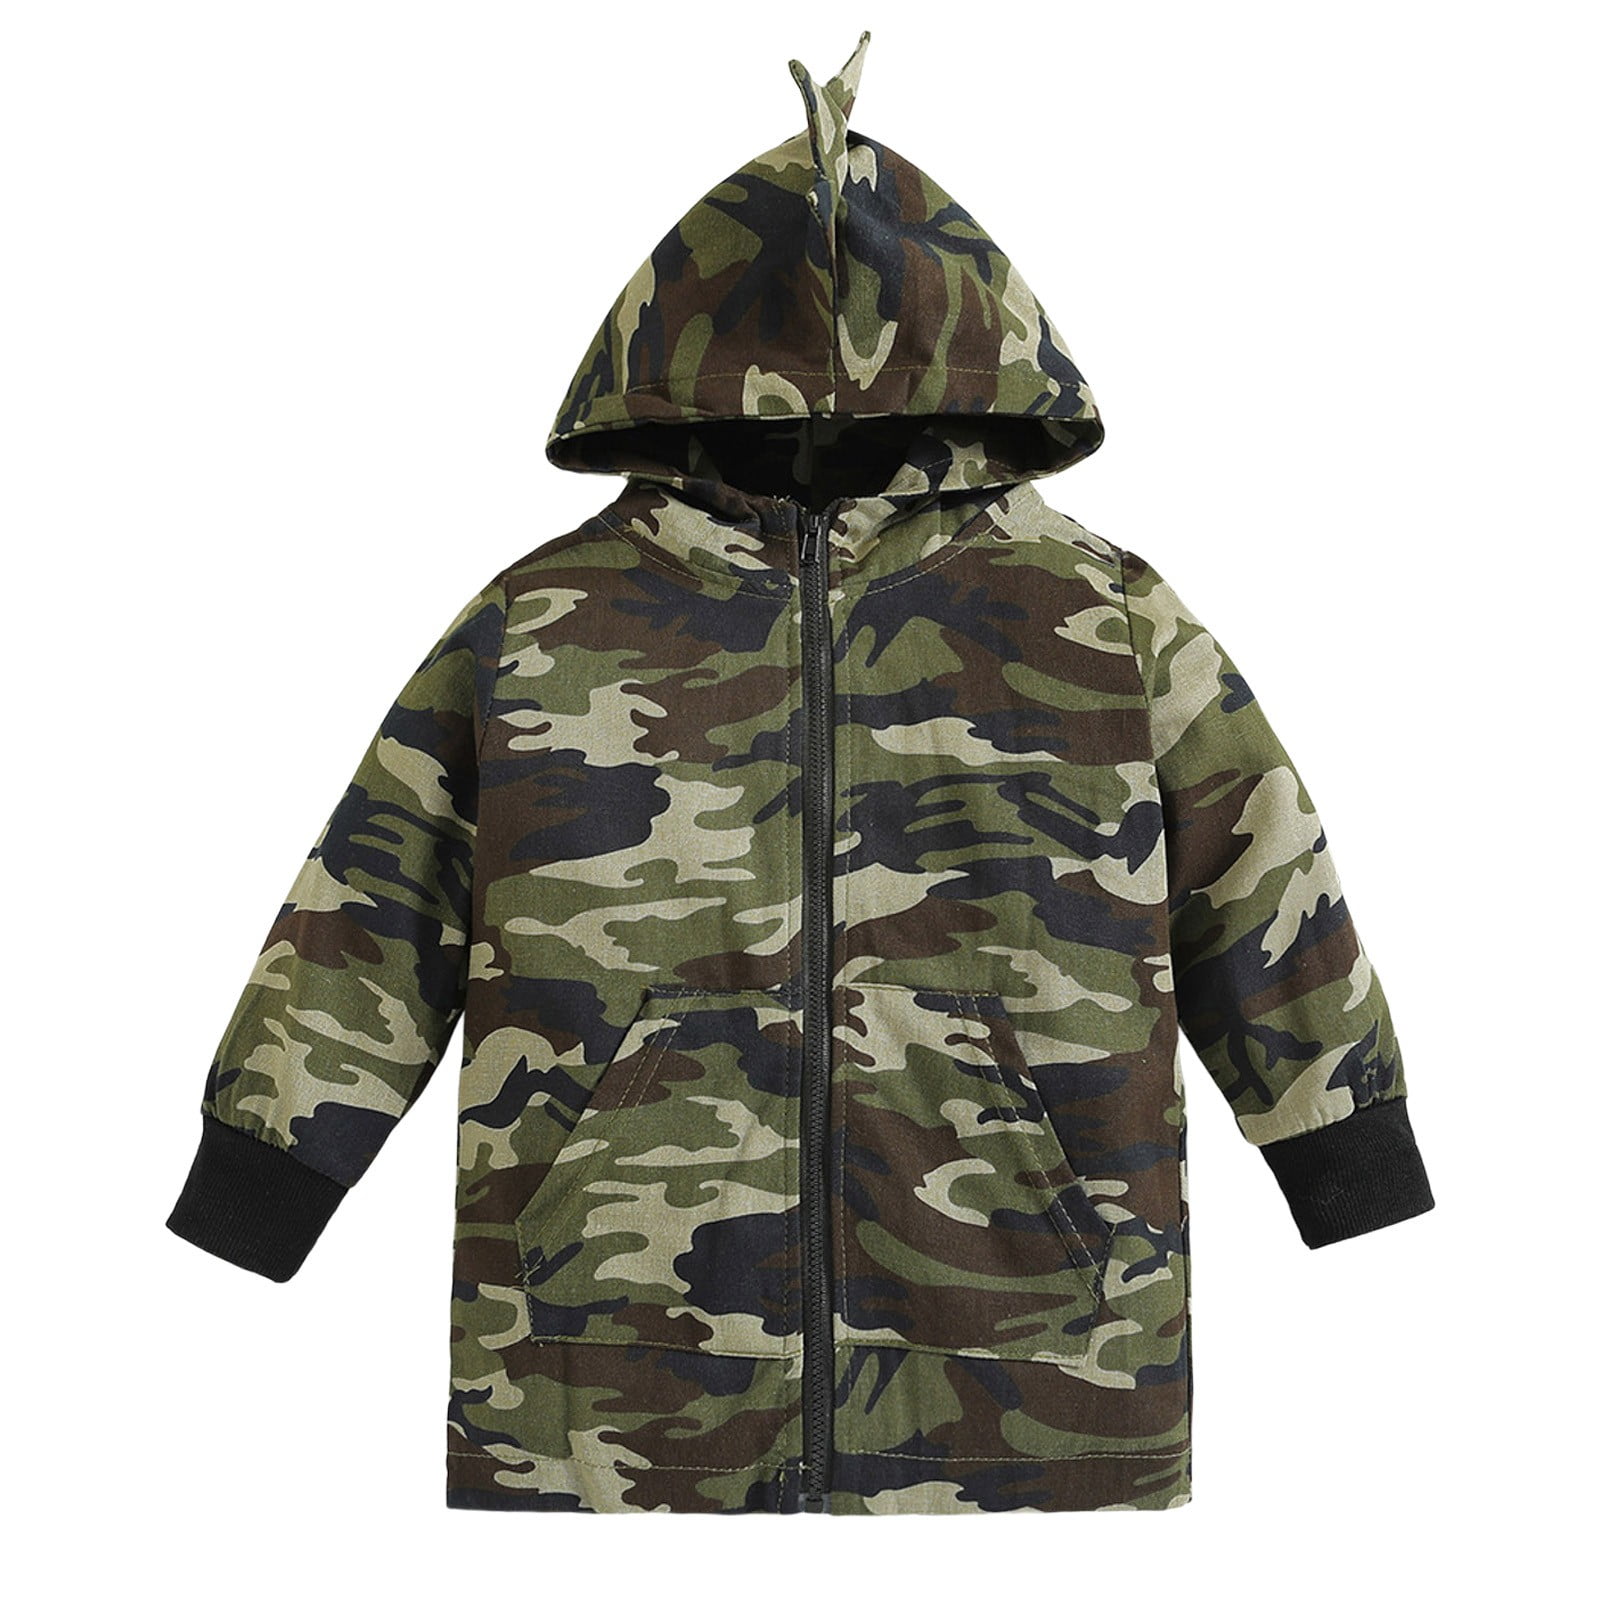 nsendm 4t Winter Coat Boys Girls Long Sleeve Camouflage Prints Hooded ...